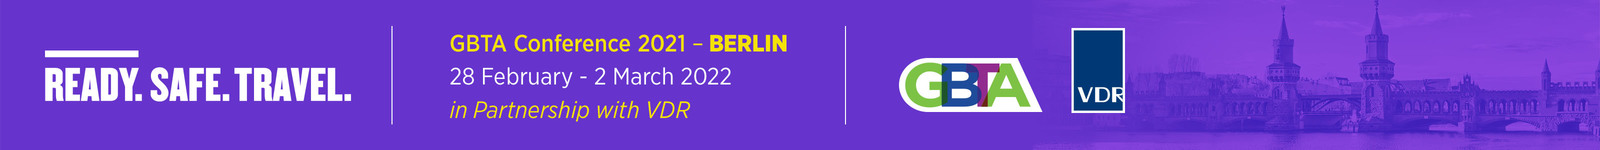 GBTA Conference 2021 – Berlin in Partnership with VDR logo